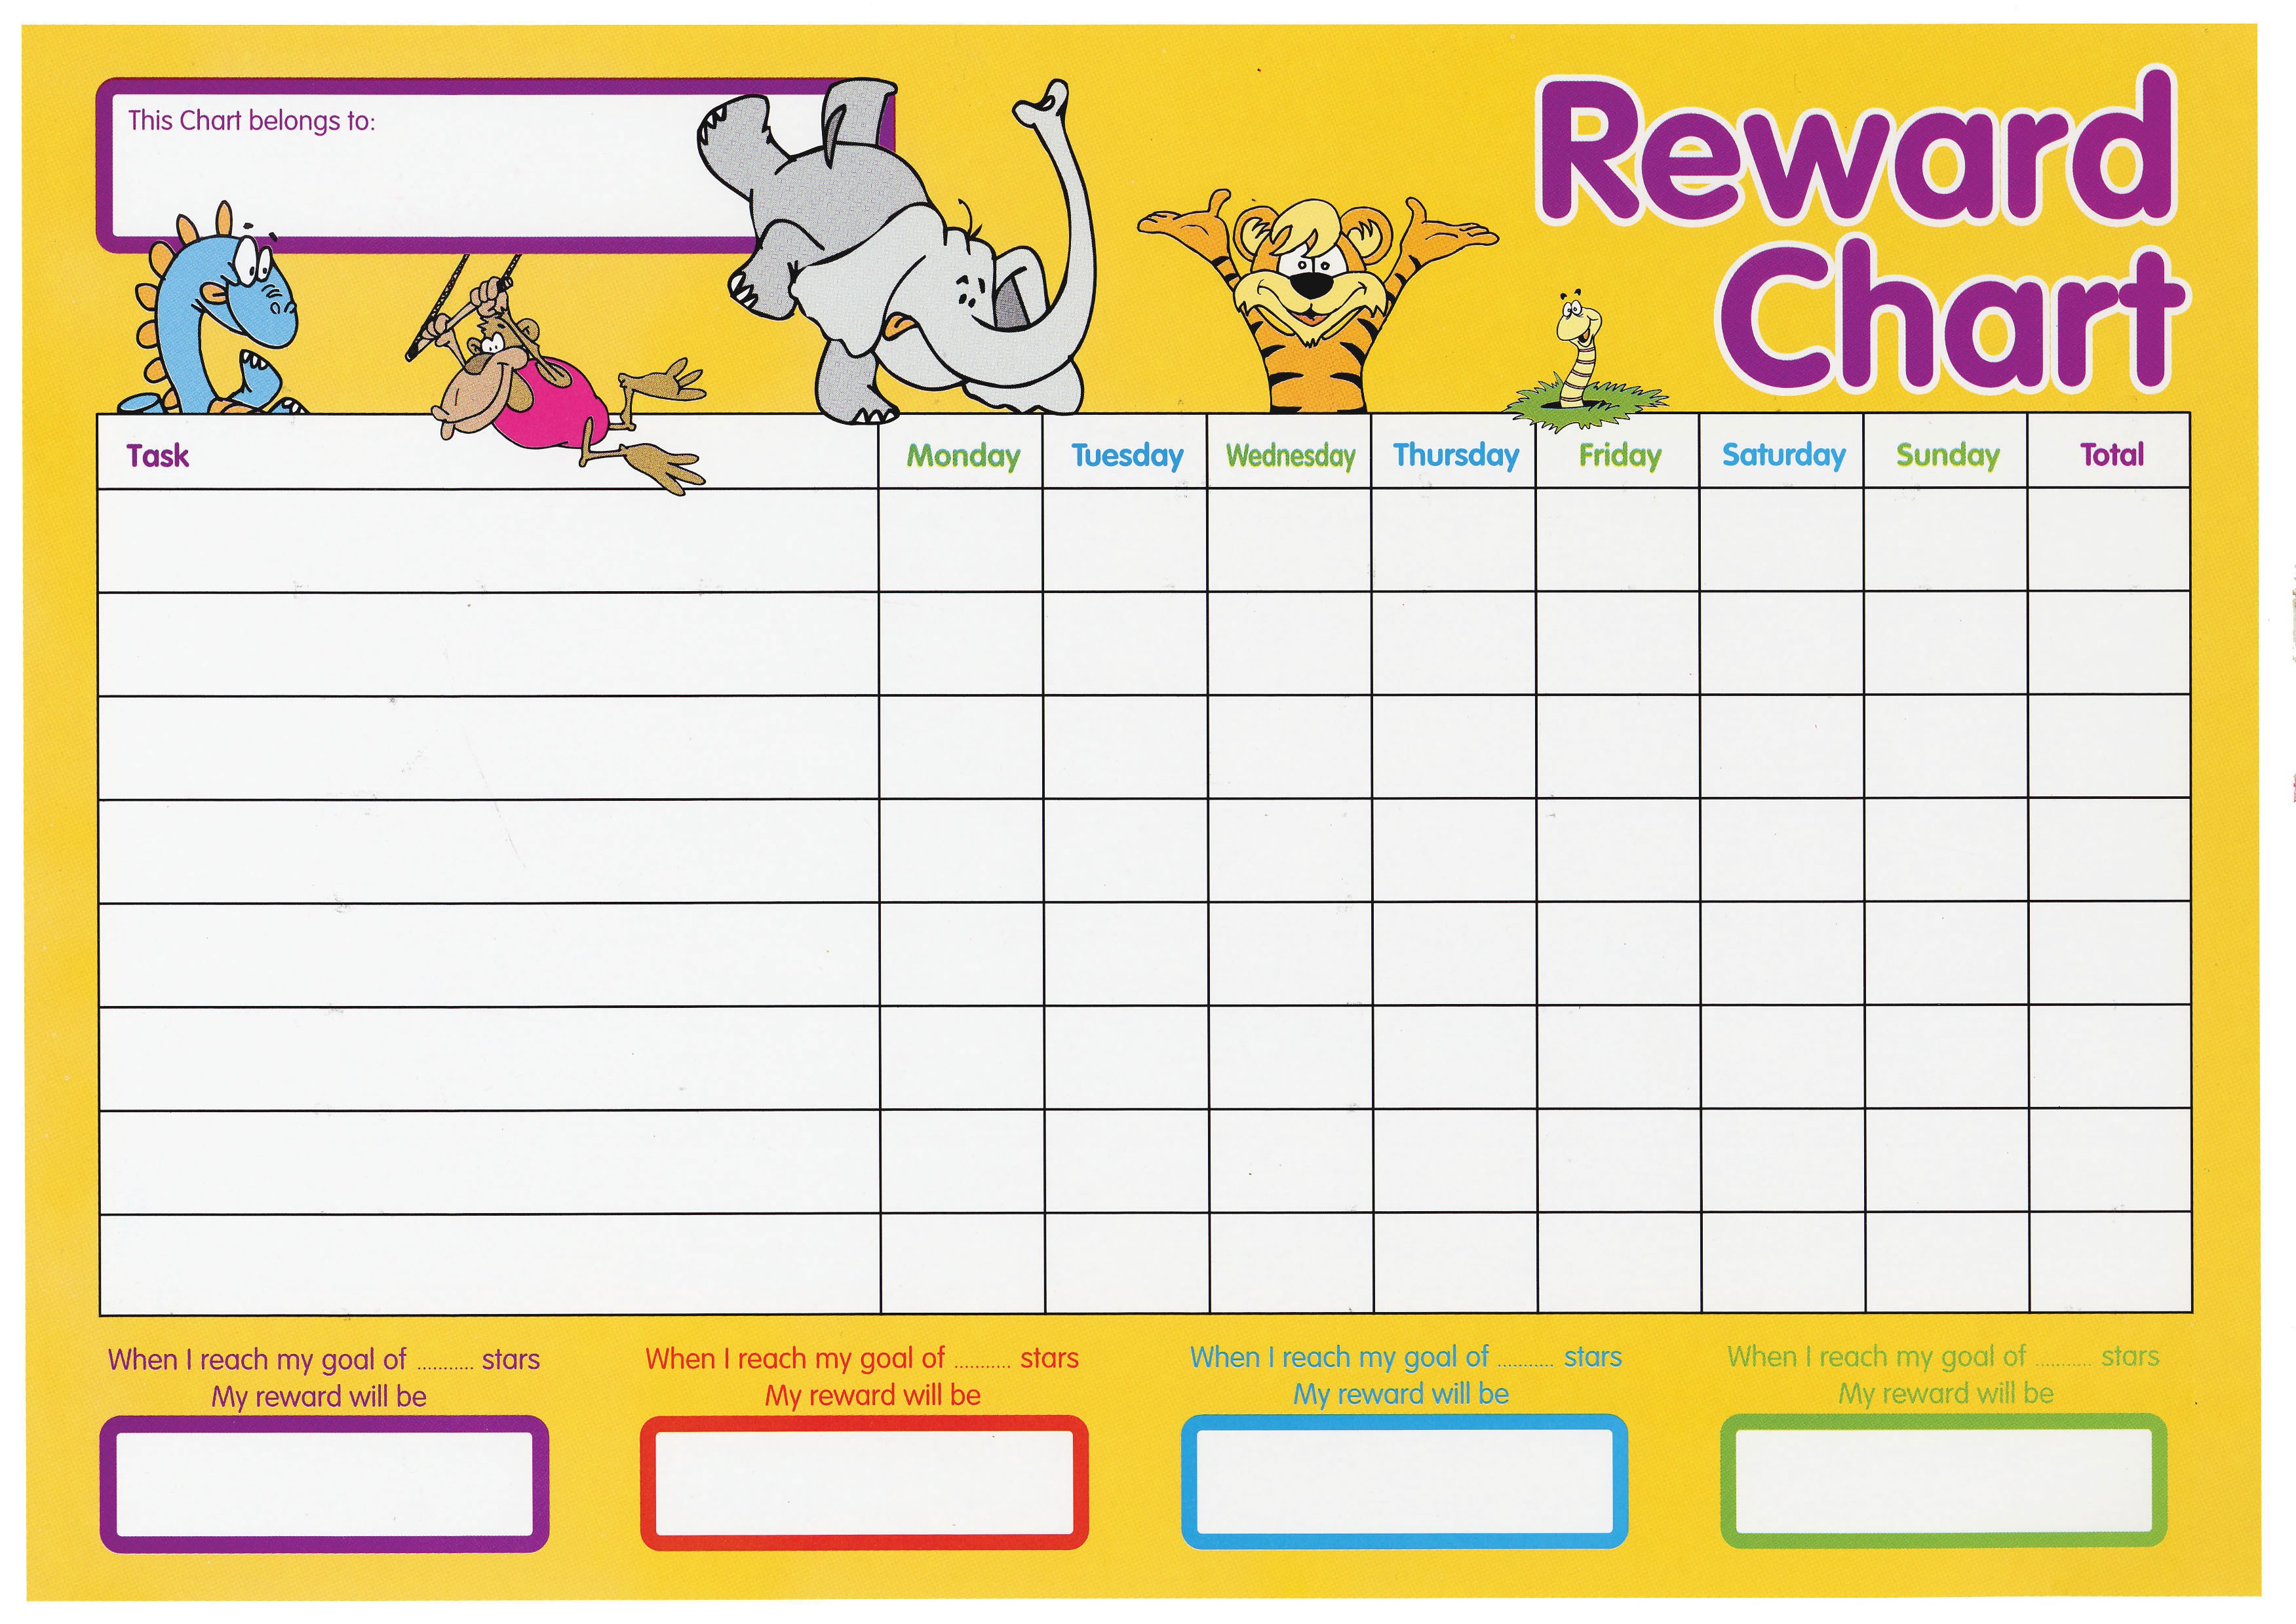 My Reward Chart Display Posters Reward Chart For Kids Lupon gov ph